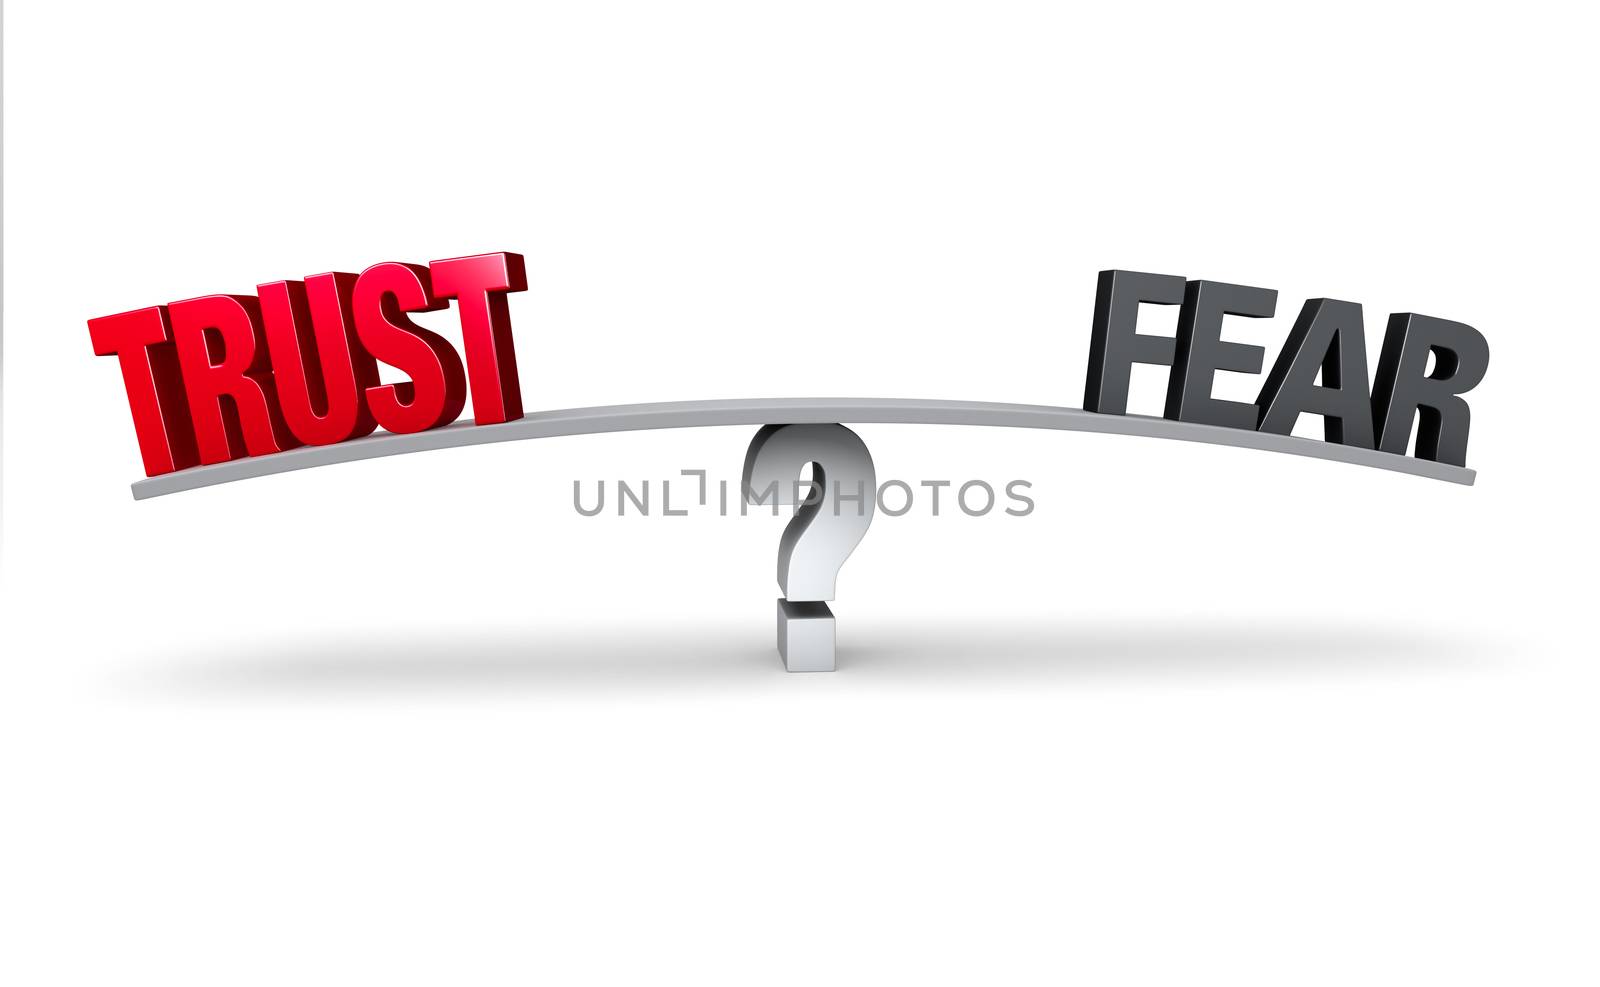 Choosing Between Trust and Fear by Em3